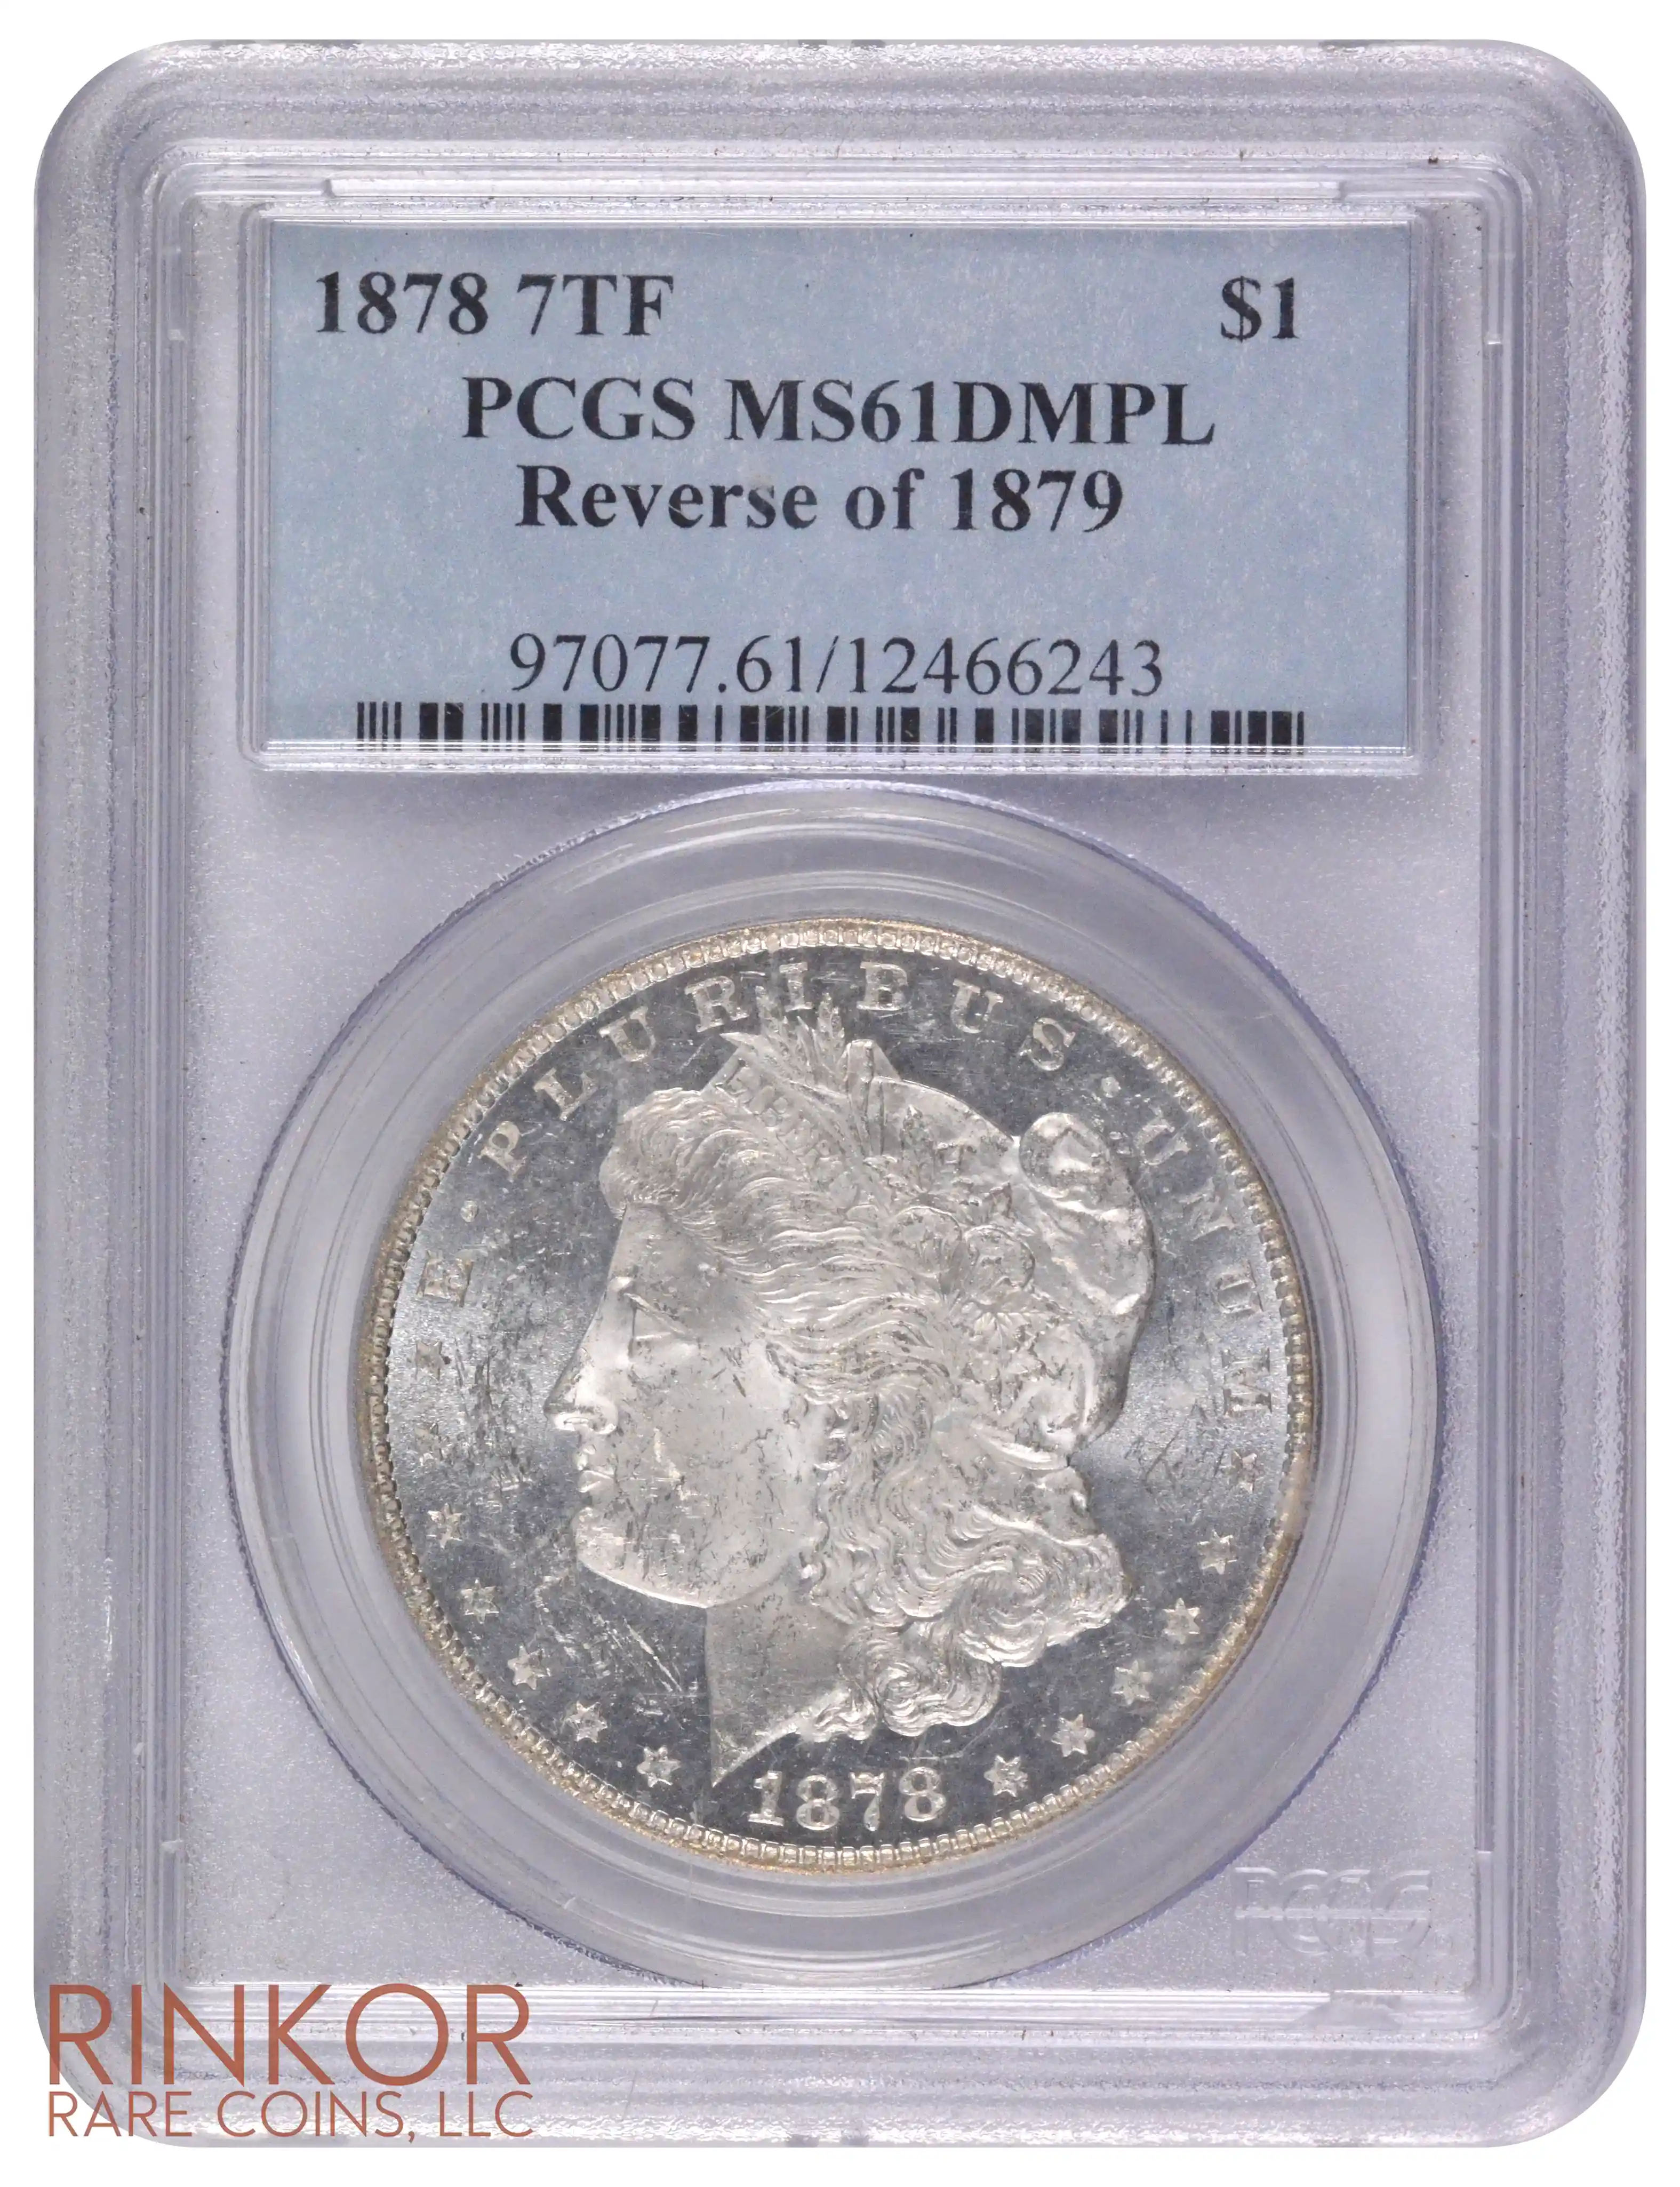 1878 7TF $1 Reverse of 1879 PCGS MS 61 DMPL 